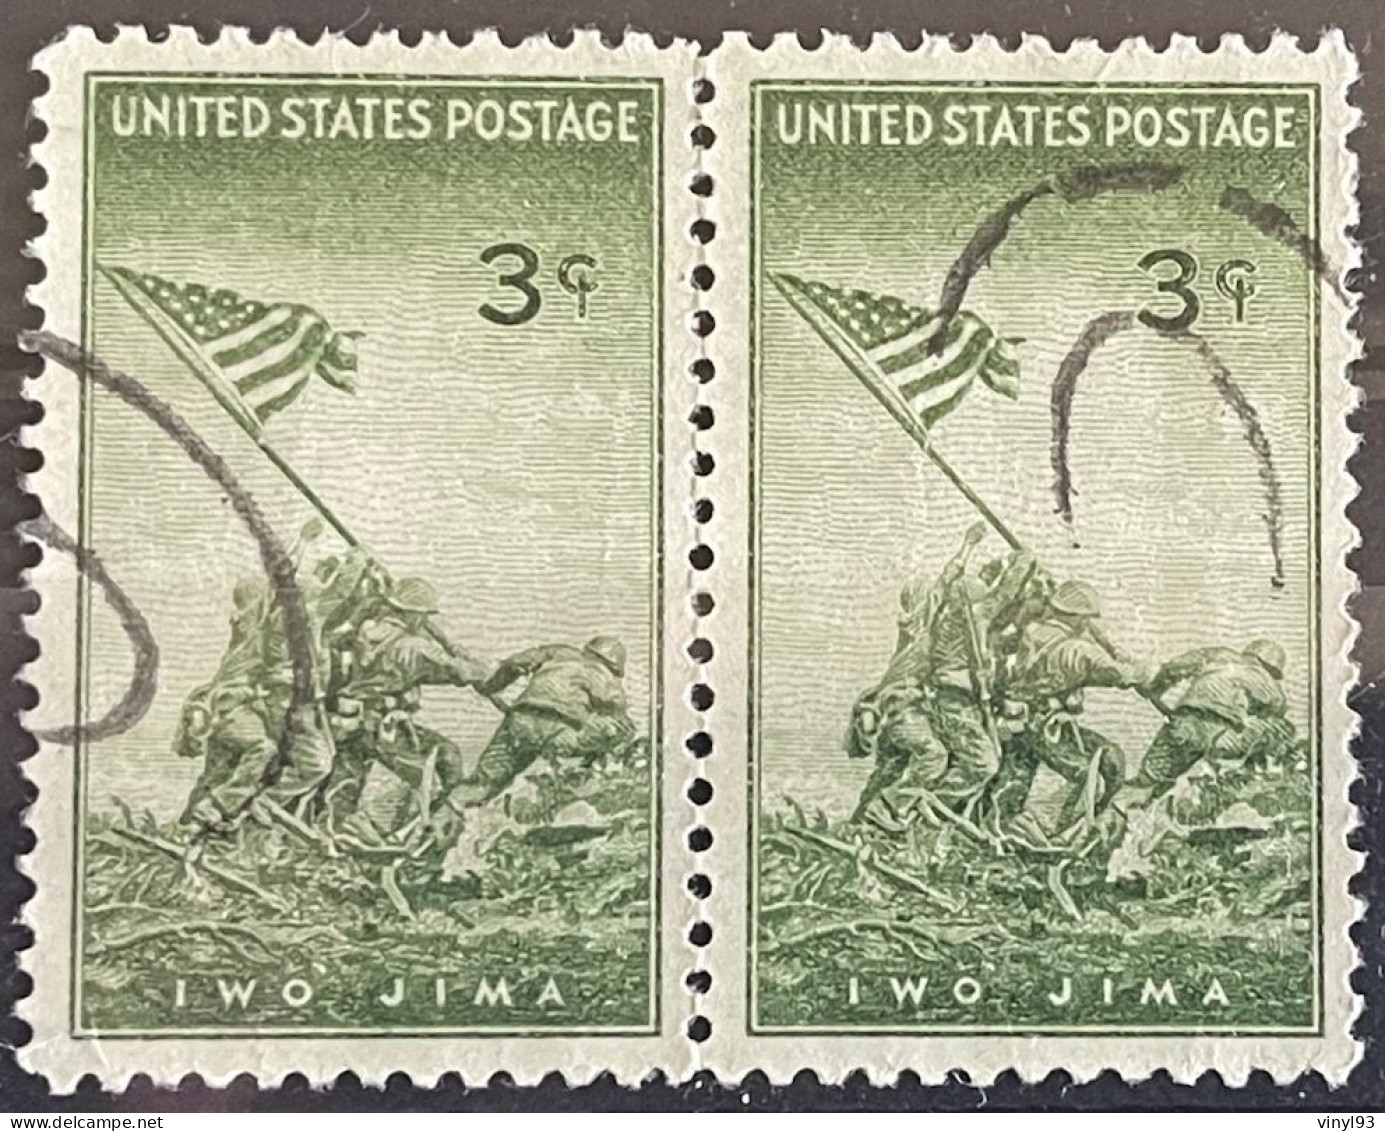 1945 - US Postage Used Stamps - USA 2 Timbres Oblitérés Attachés Y&T N°481 - Iwo Jima - Drapeau US Sur Mont Suribachi - Used Stamps